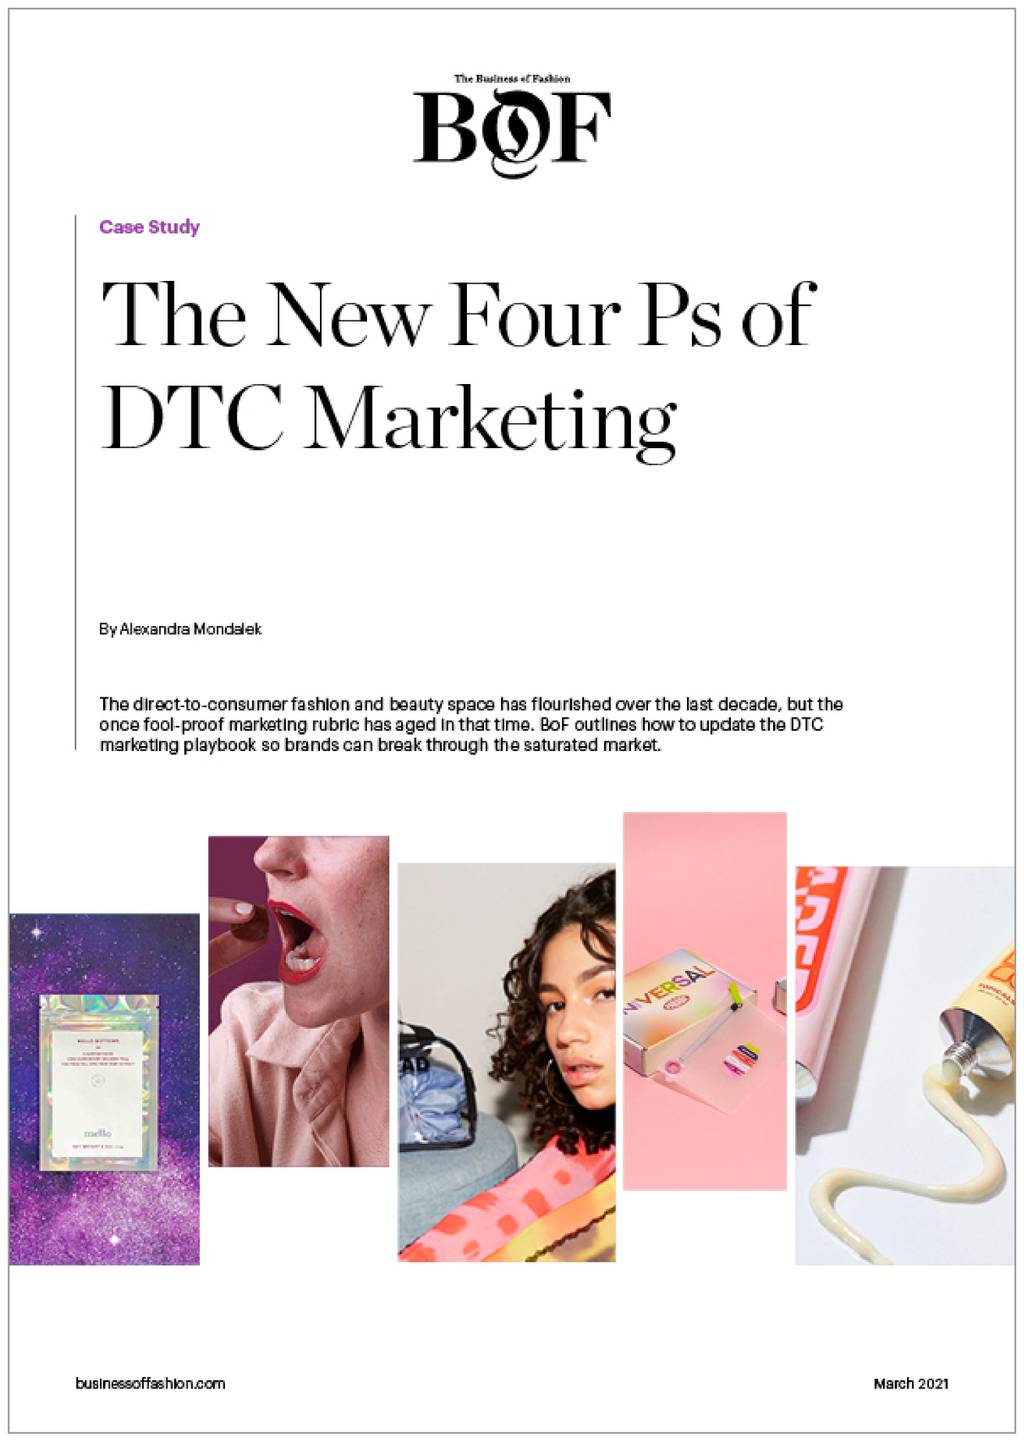 DTC marketing case study portrait